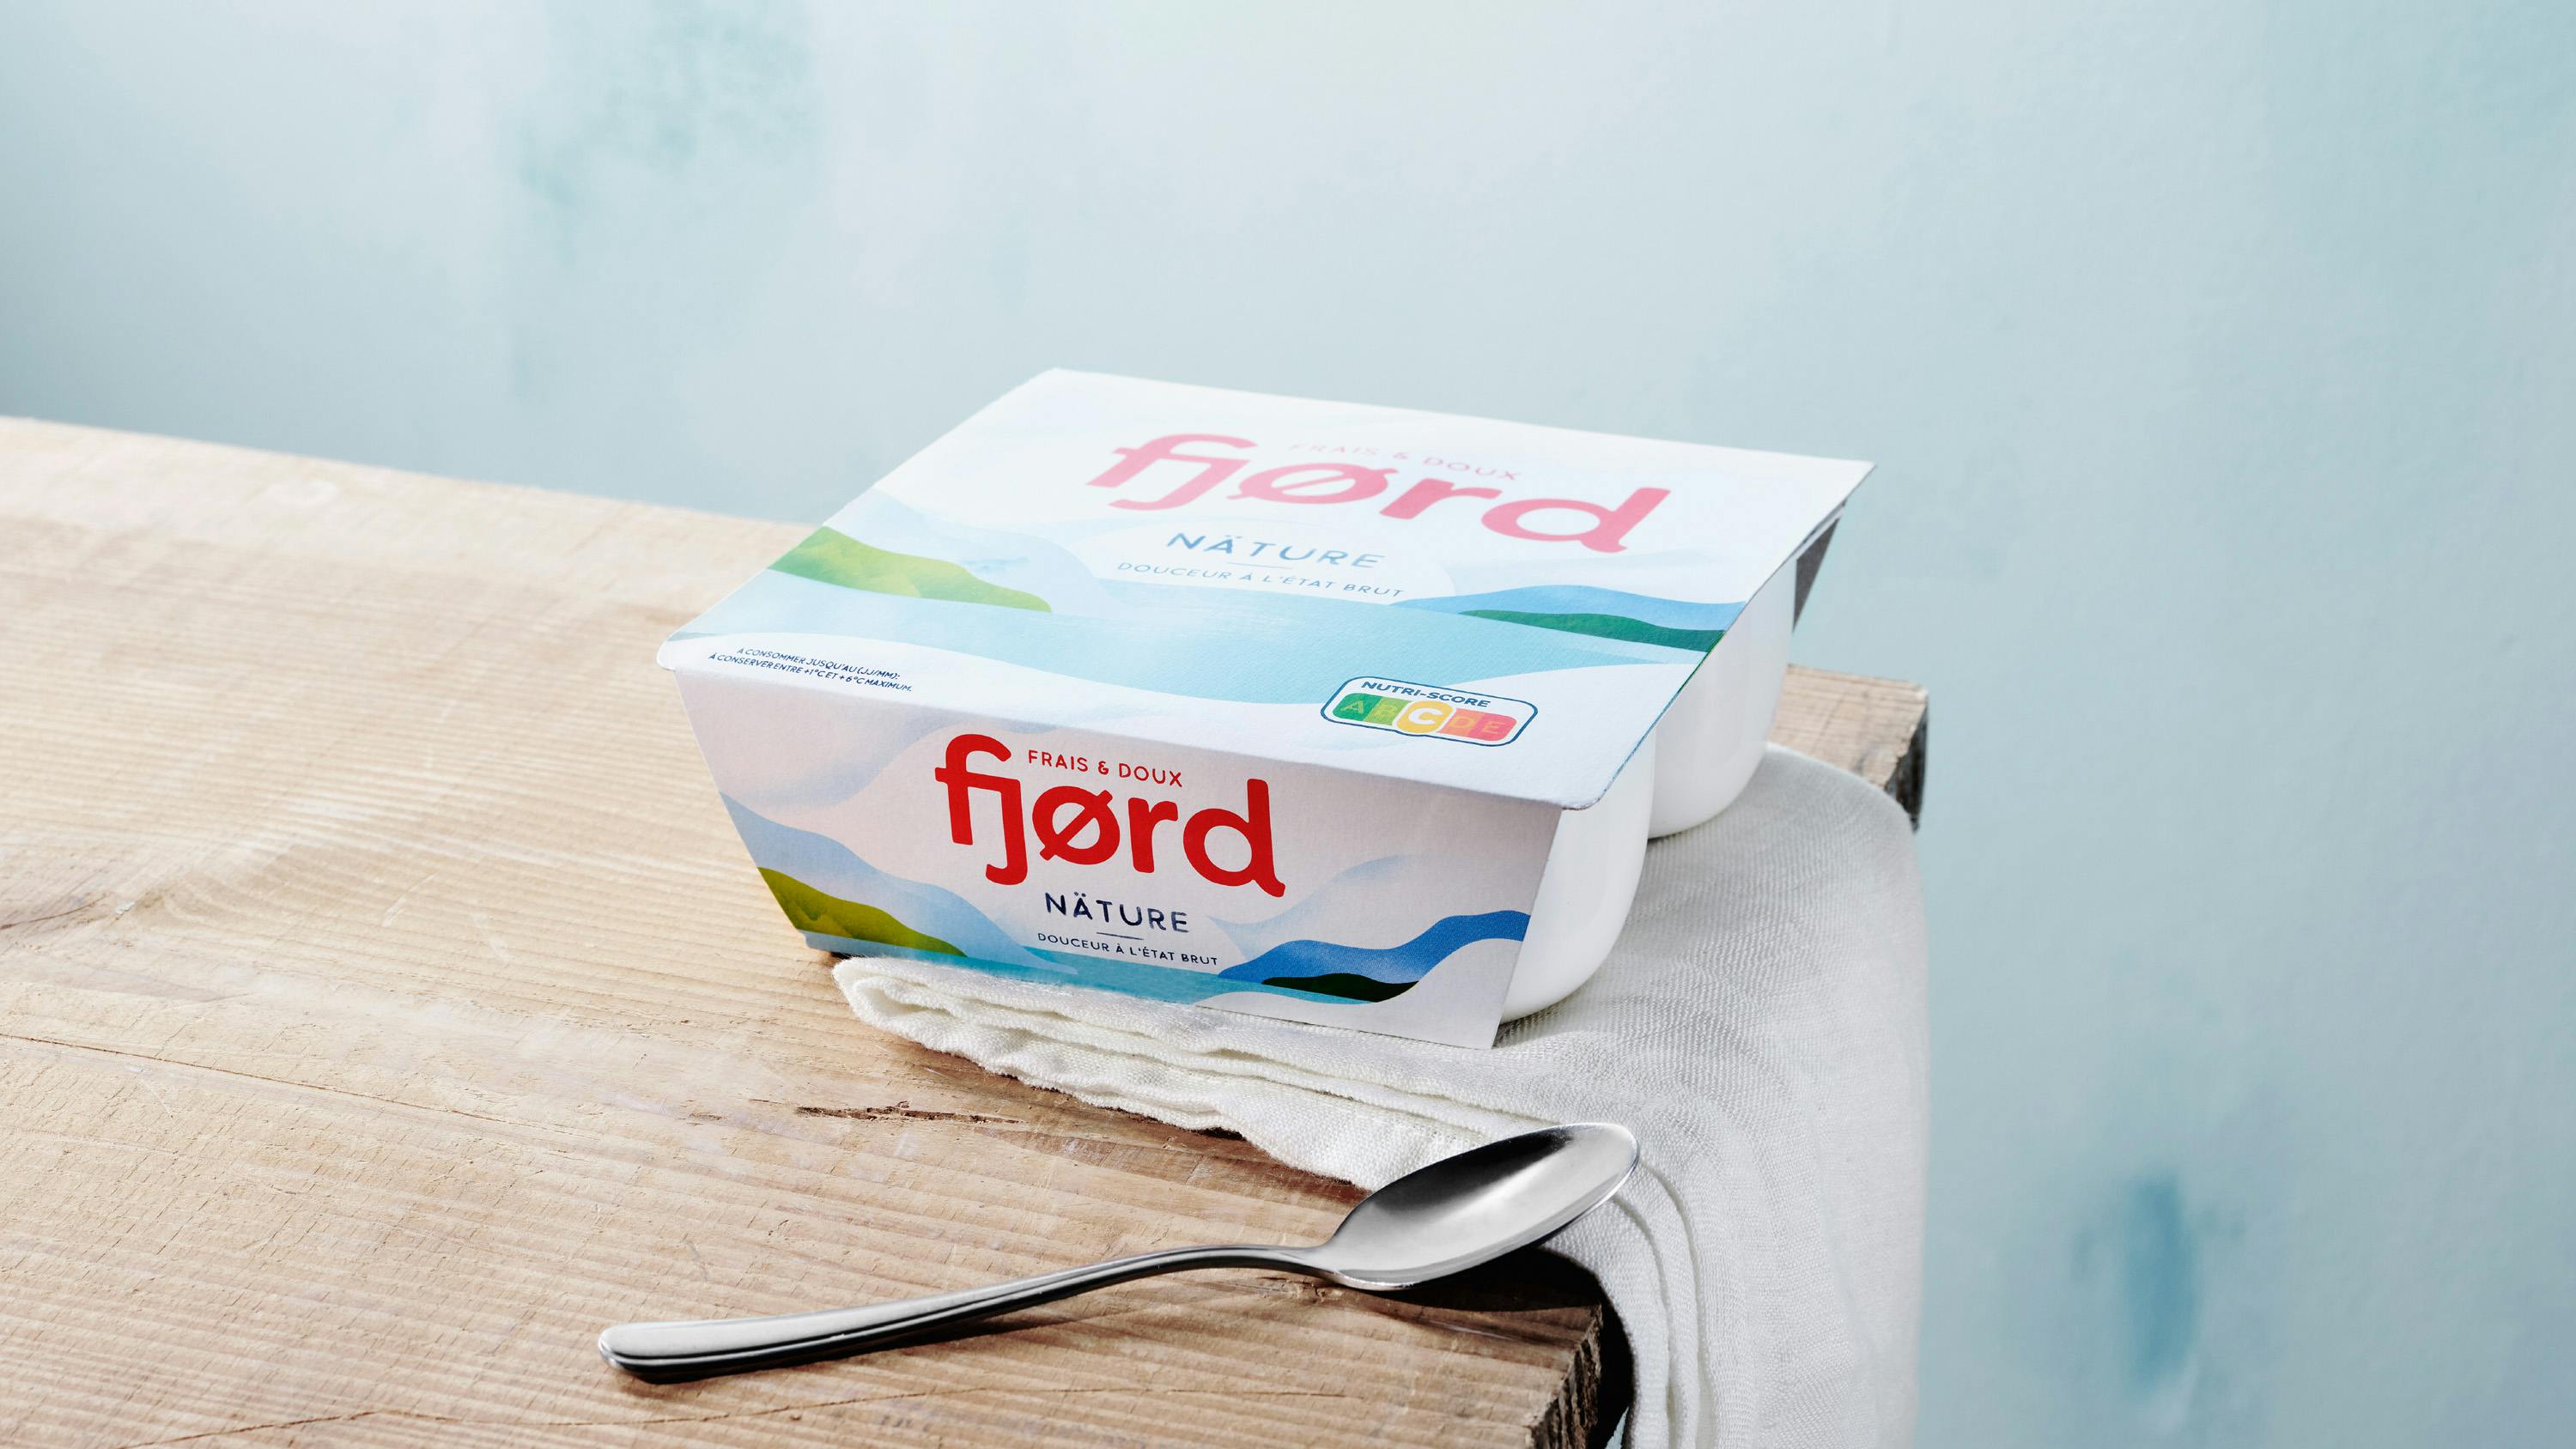 Danone Fjord cups of yogurt